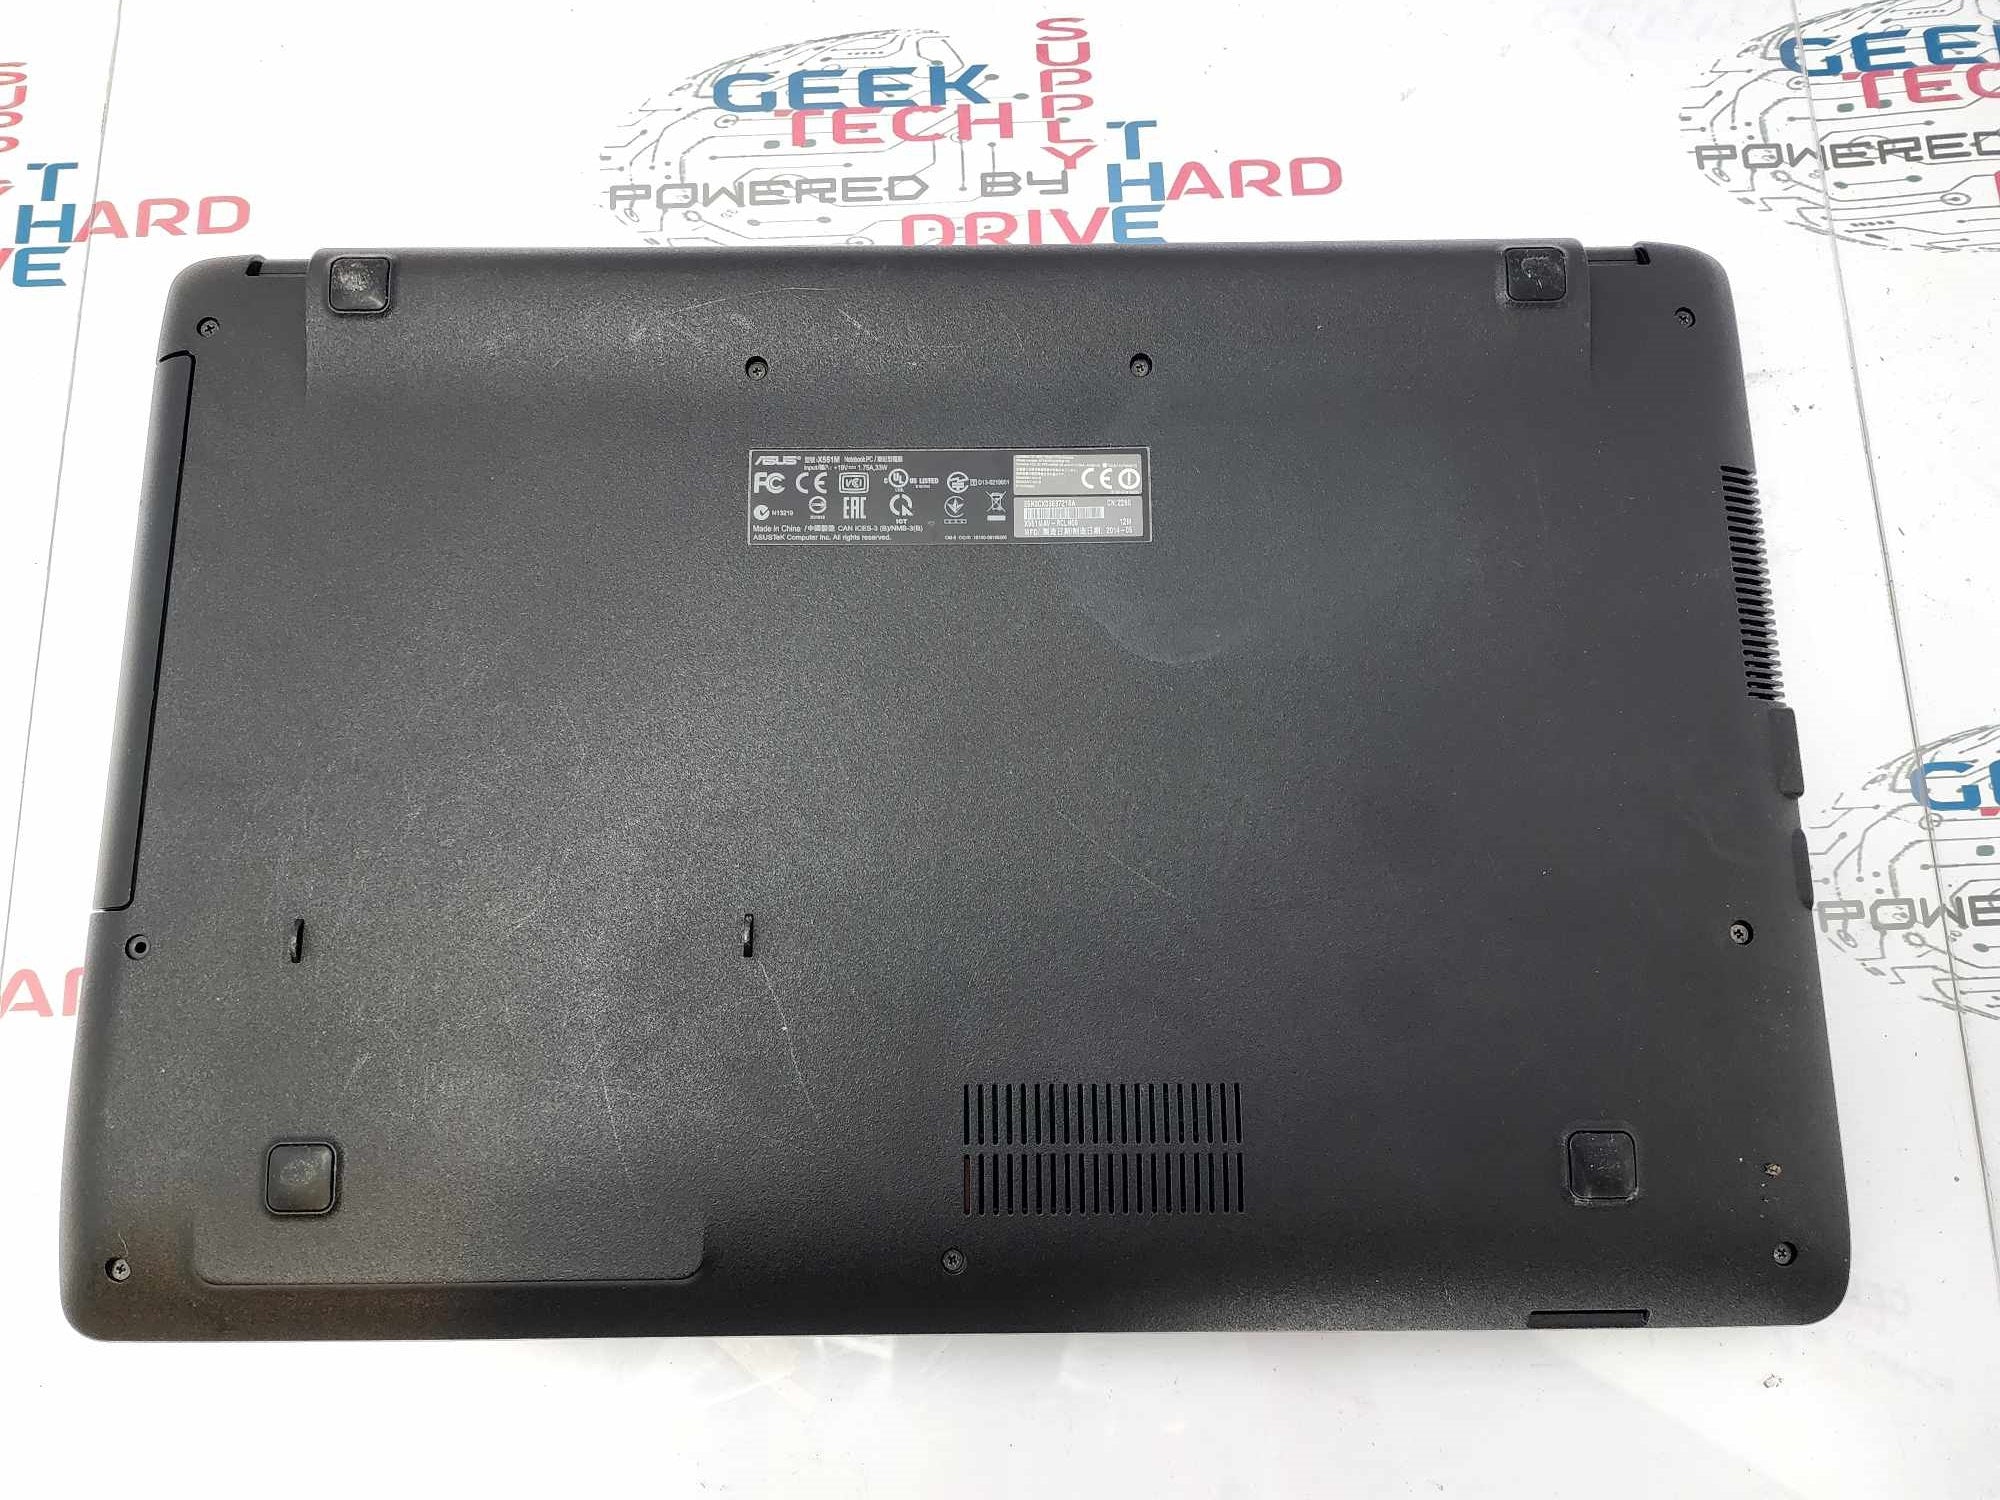 Asus X551M Notebook PC 256gb SSD Celeron N 2830 4GB RAM | B Grade - Geek Tech